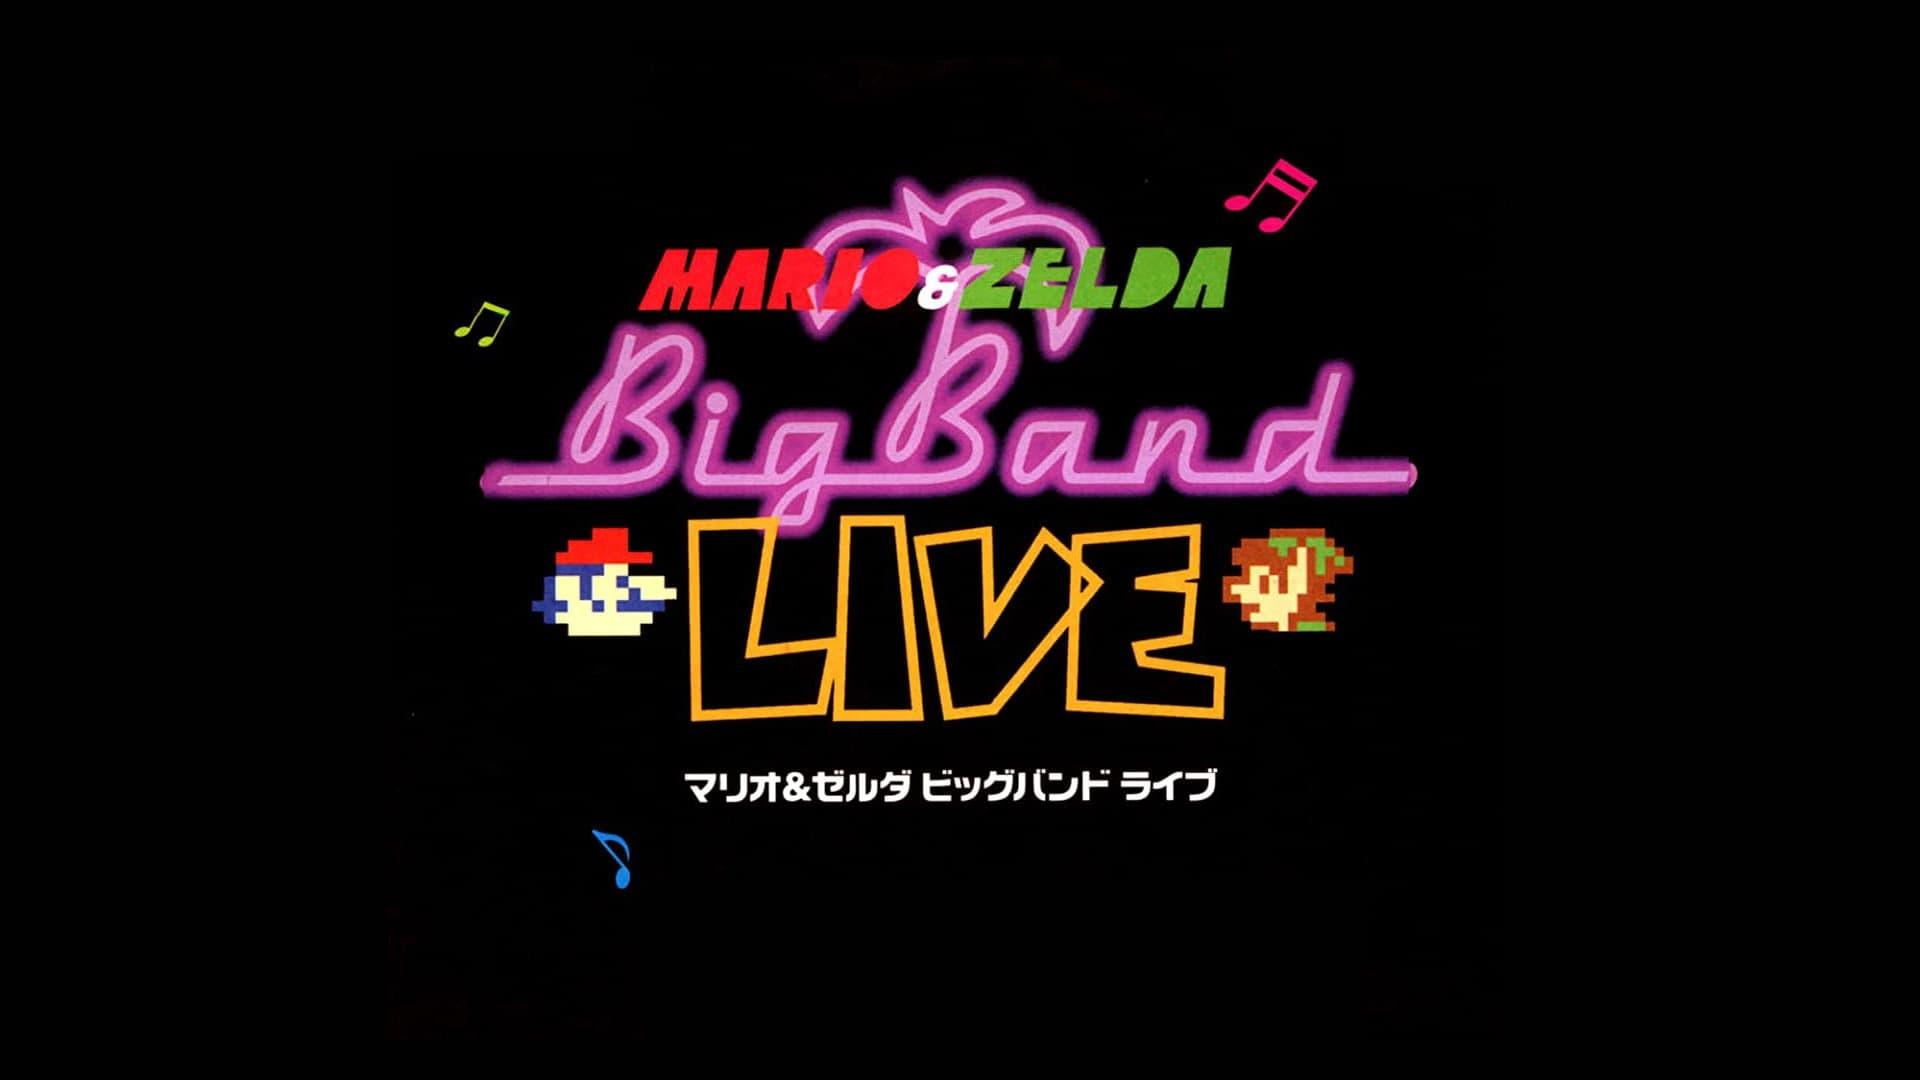 Mario & Zelda Big Band Live DVD backdrop